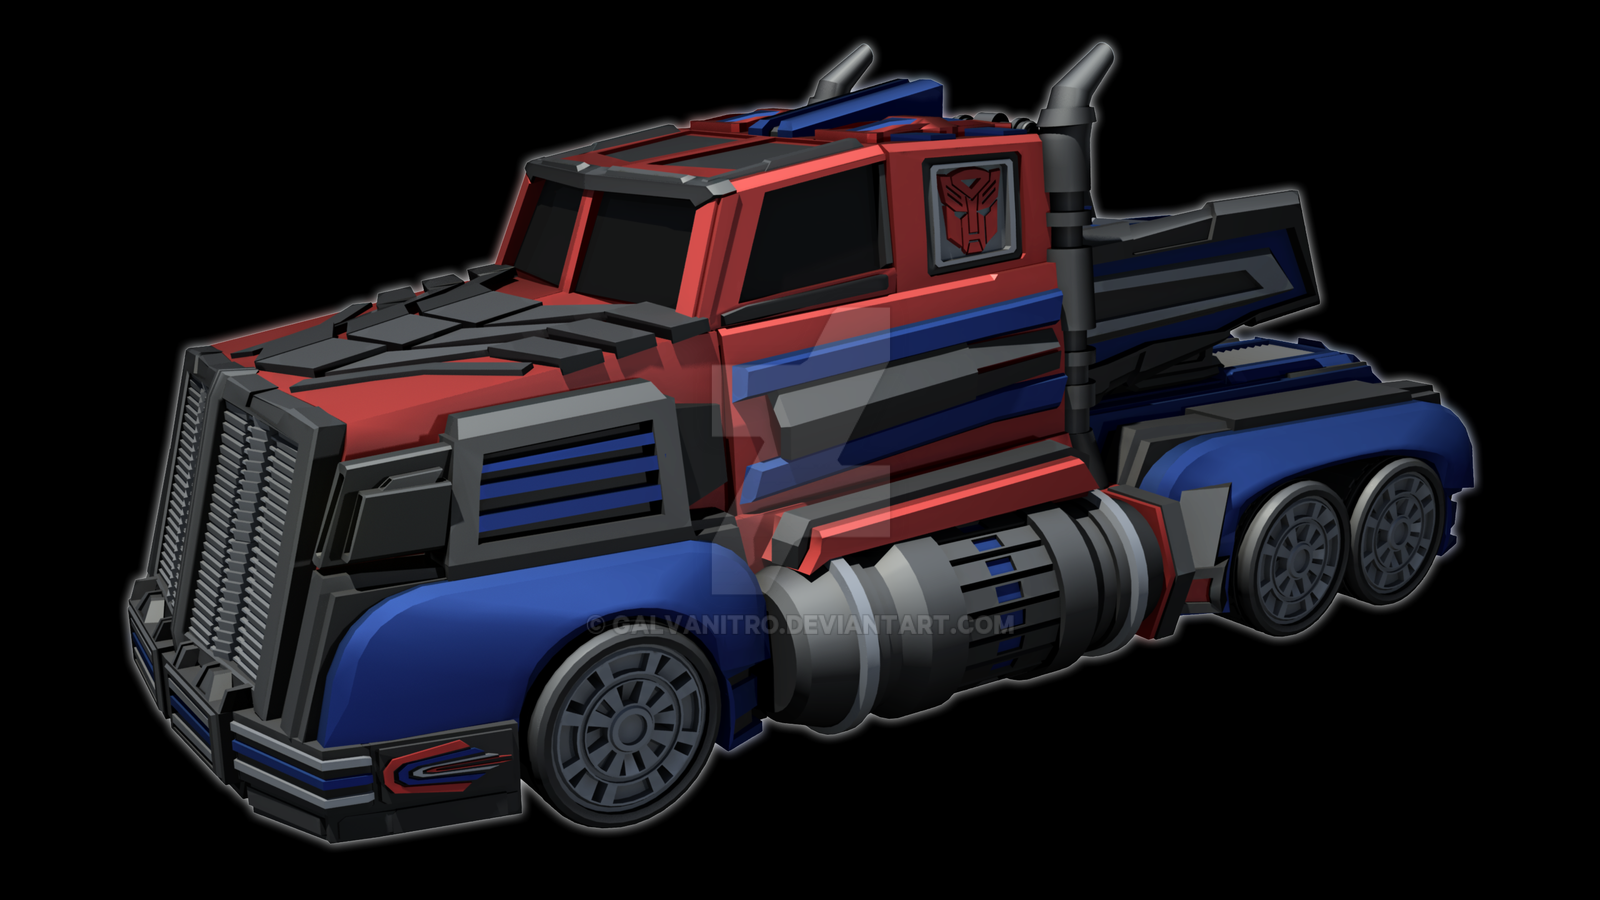 Firestorm Optimus Prime - Truck Mode by Galvanitro on DeviantArt